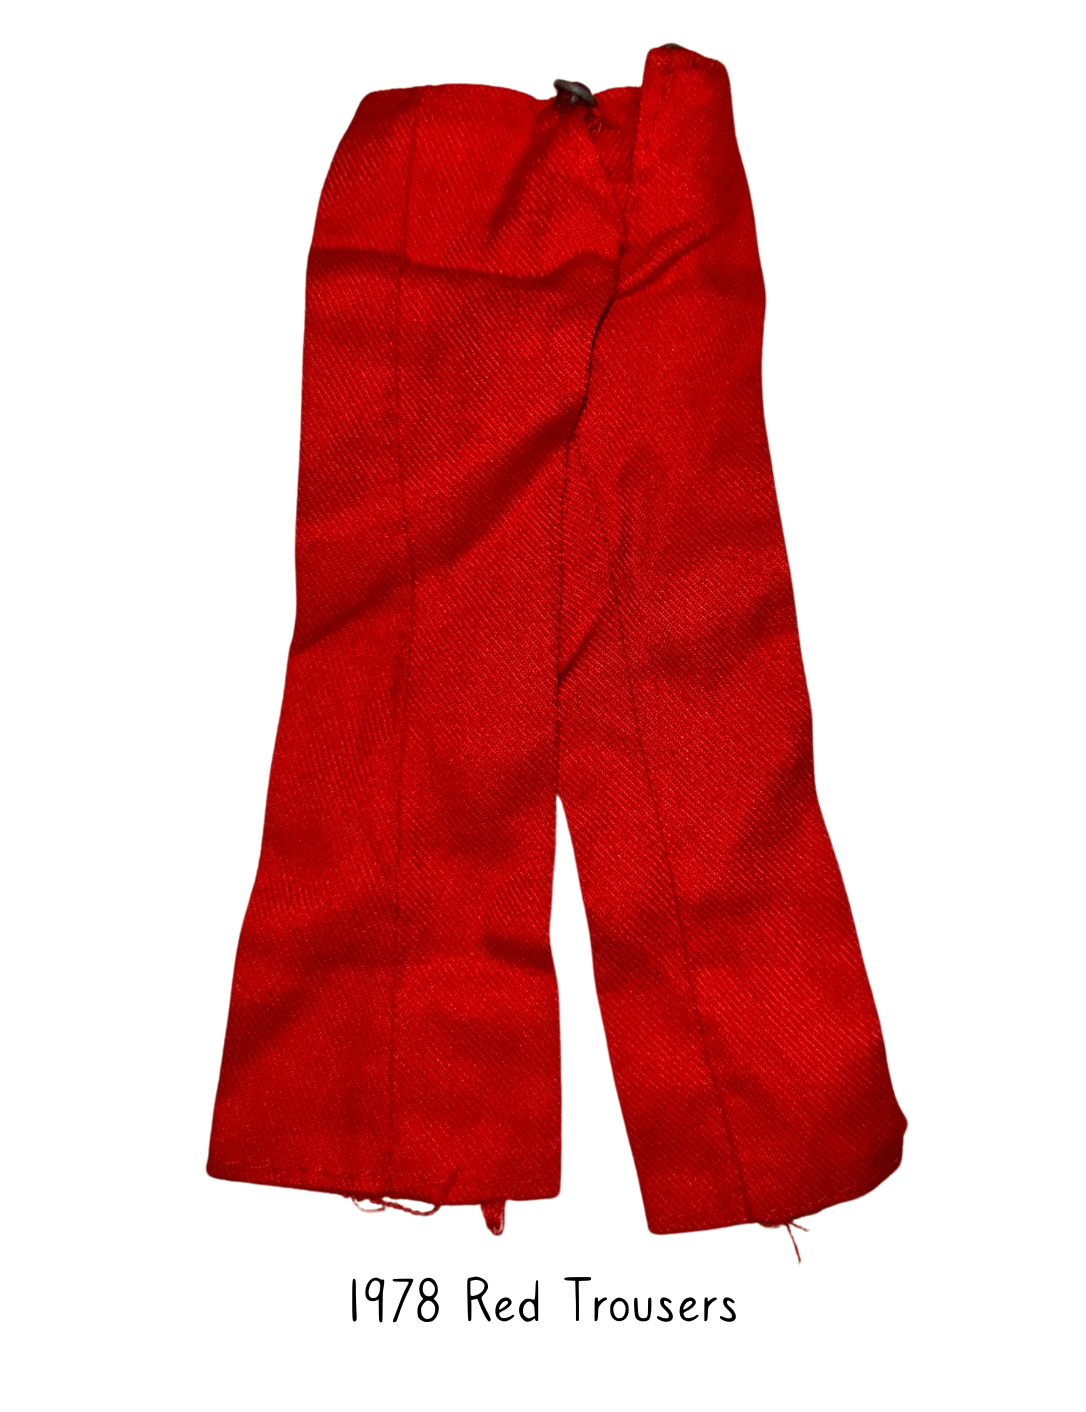 Pedigree Sindy 1978 Mix n Match Red Trousers